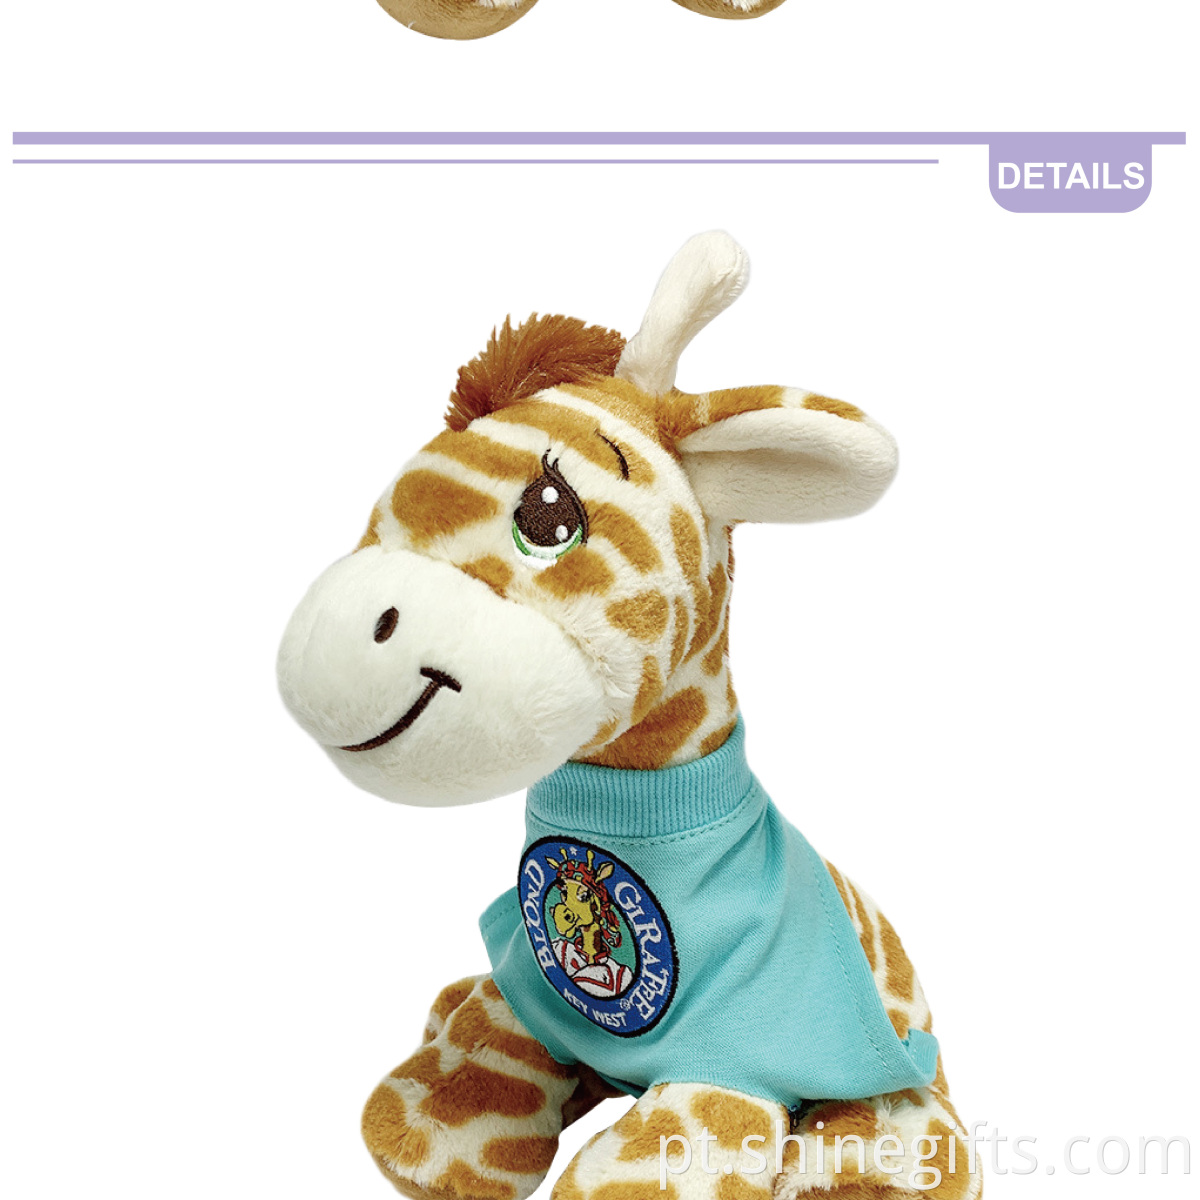 Amazon Oem/odm New Product Wholesale Price Custom Cute Decorative Animals Plush Toy 6 Inch Sparkle Eyes Comfies Sitting Giraffe